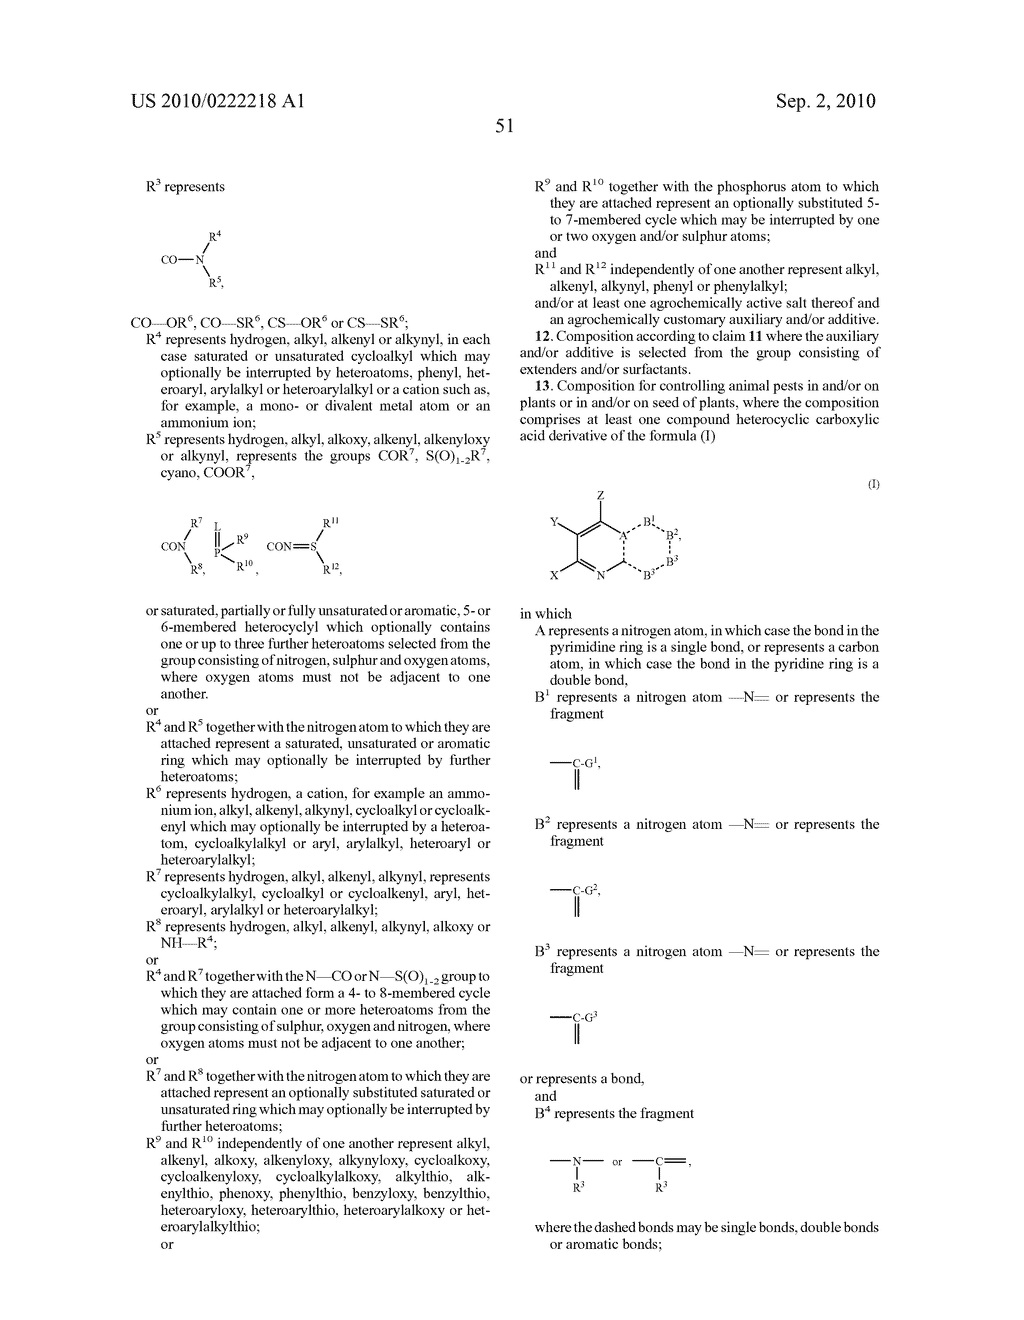 INSECTICIDAL HETEROCYCLIC CARBOXYLIC ACID DERIVATIVES - diagram, schematic, and image 52